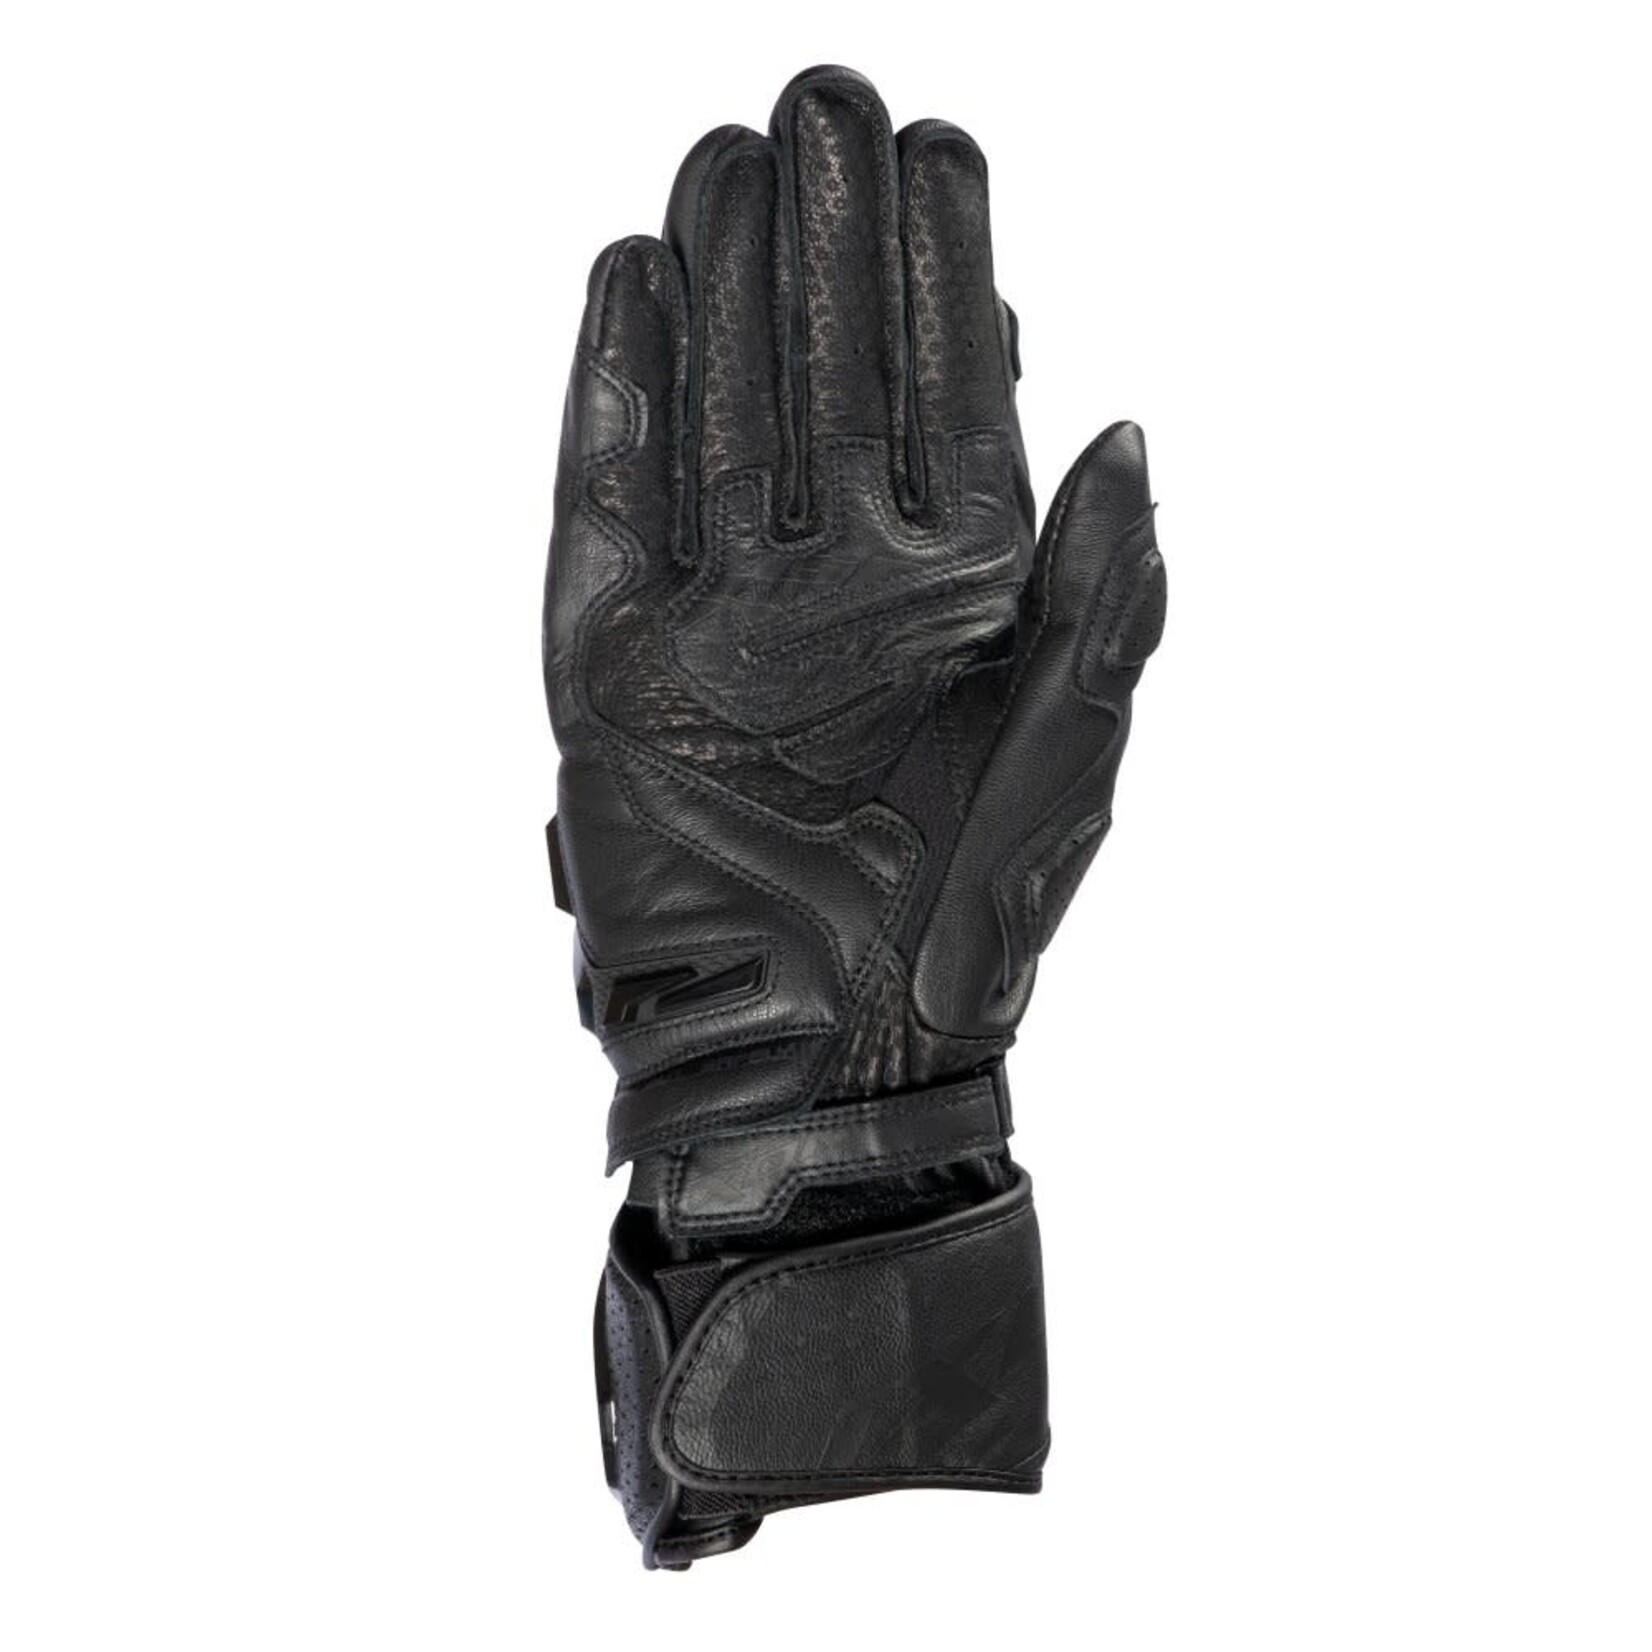 Ixon Ixon glove gp4 air black